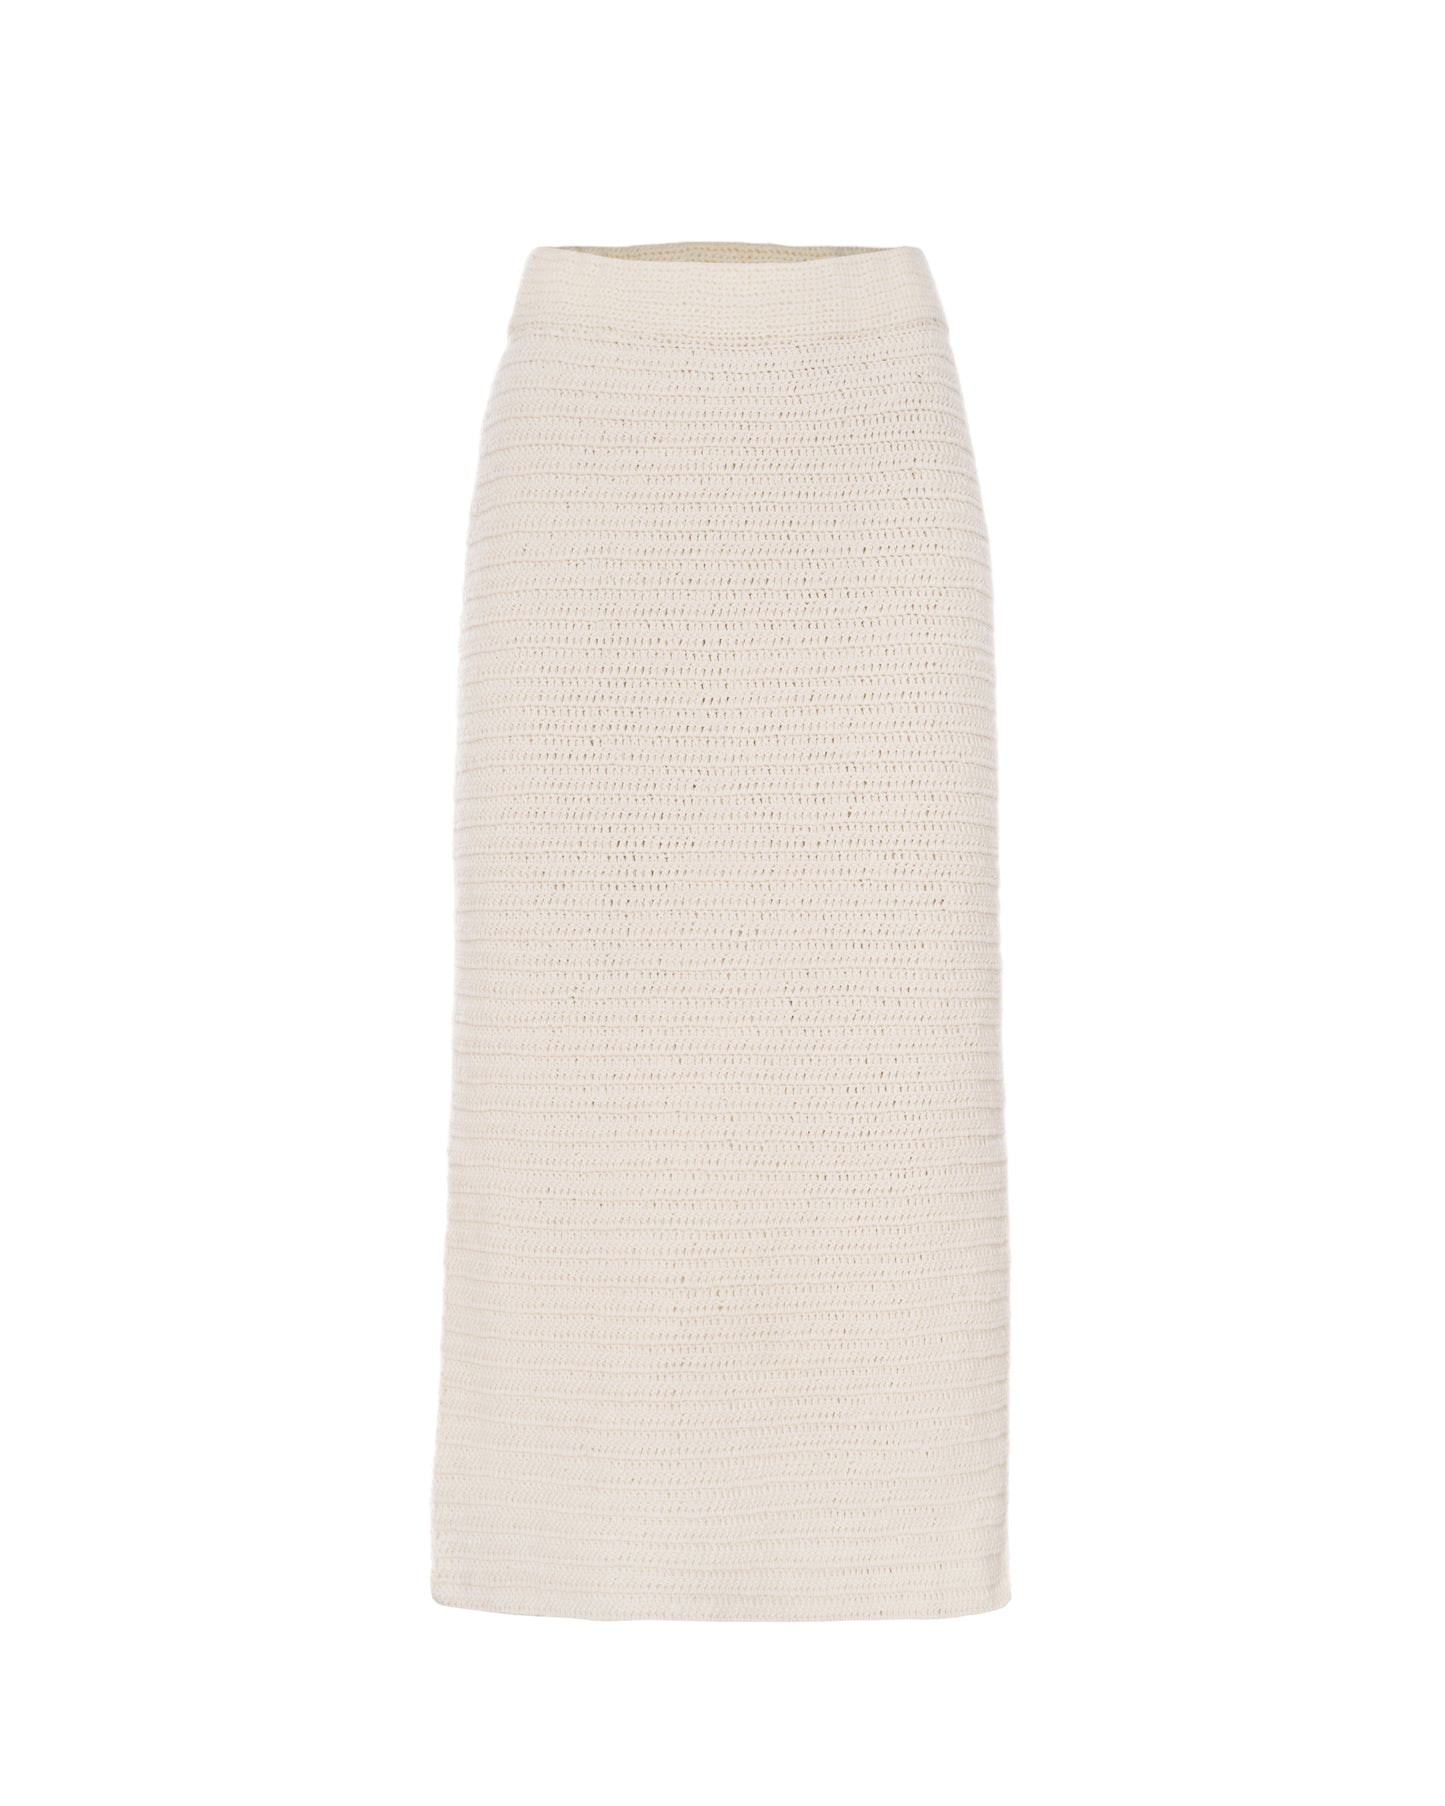 Hand-knitted ivory skirt